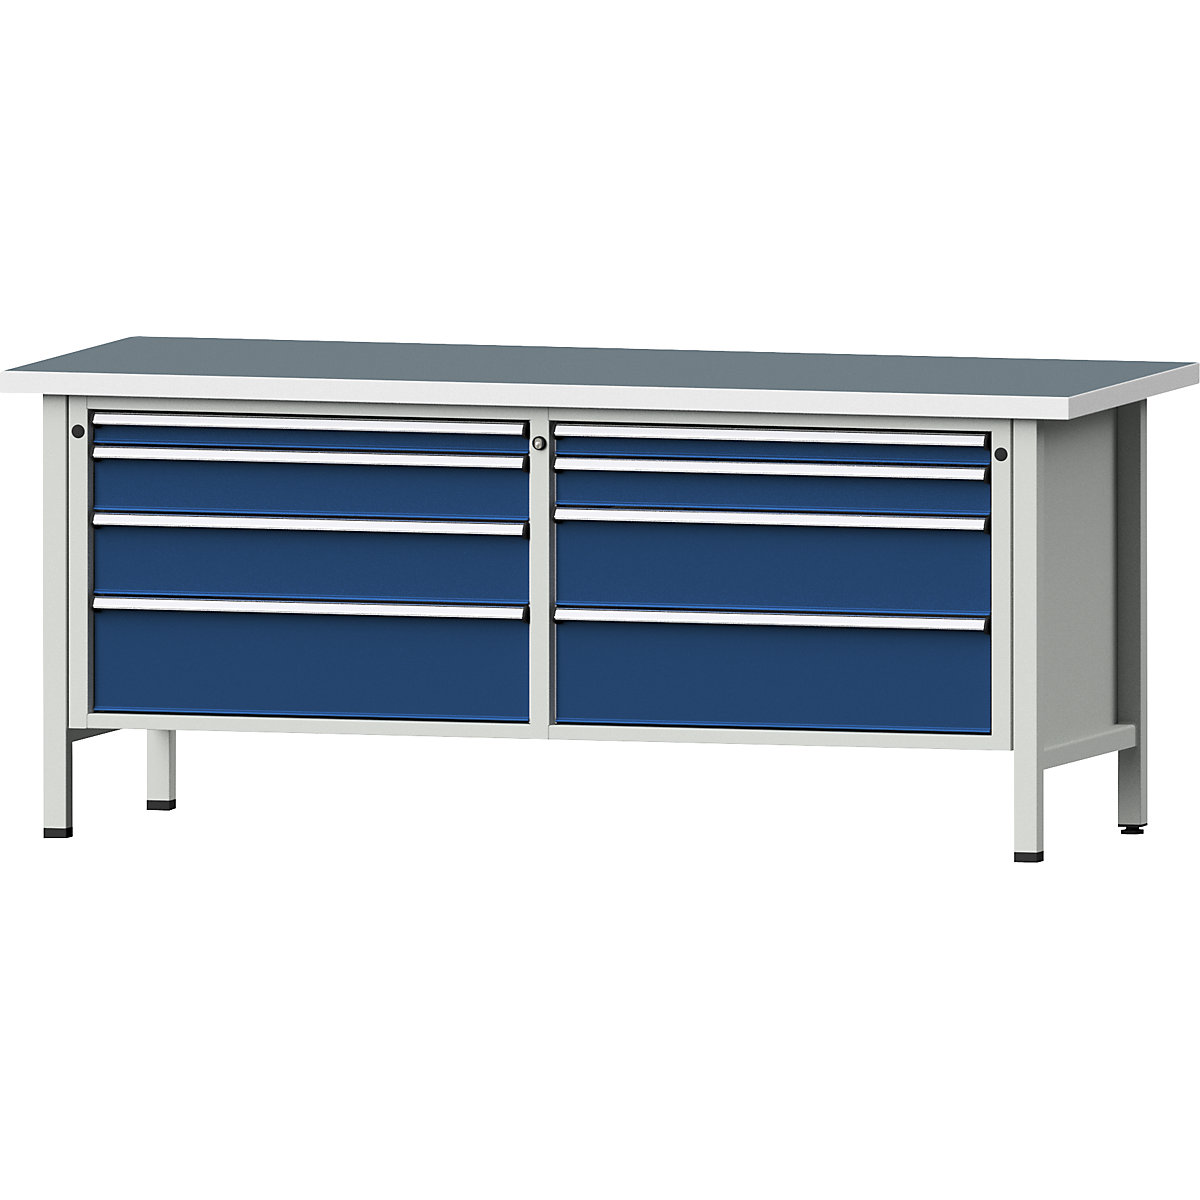 Établi avec tiroirs XL/XXL, sur piétement – ANKE, largeur 2000 mm, 8 tiroirs, plateau universel, façade bleu gentiane-9